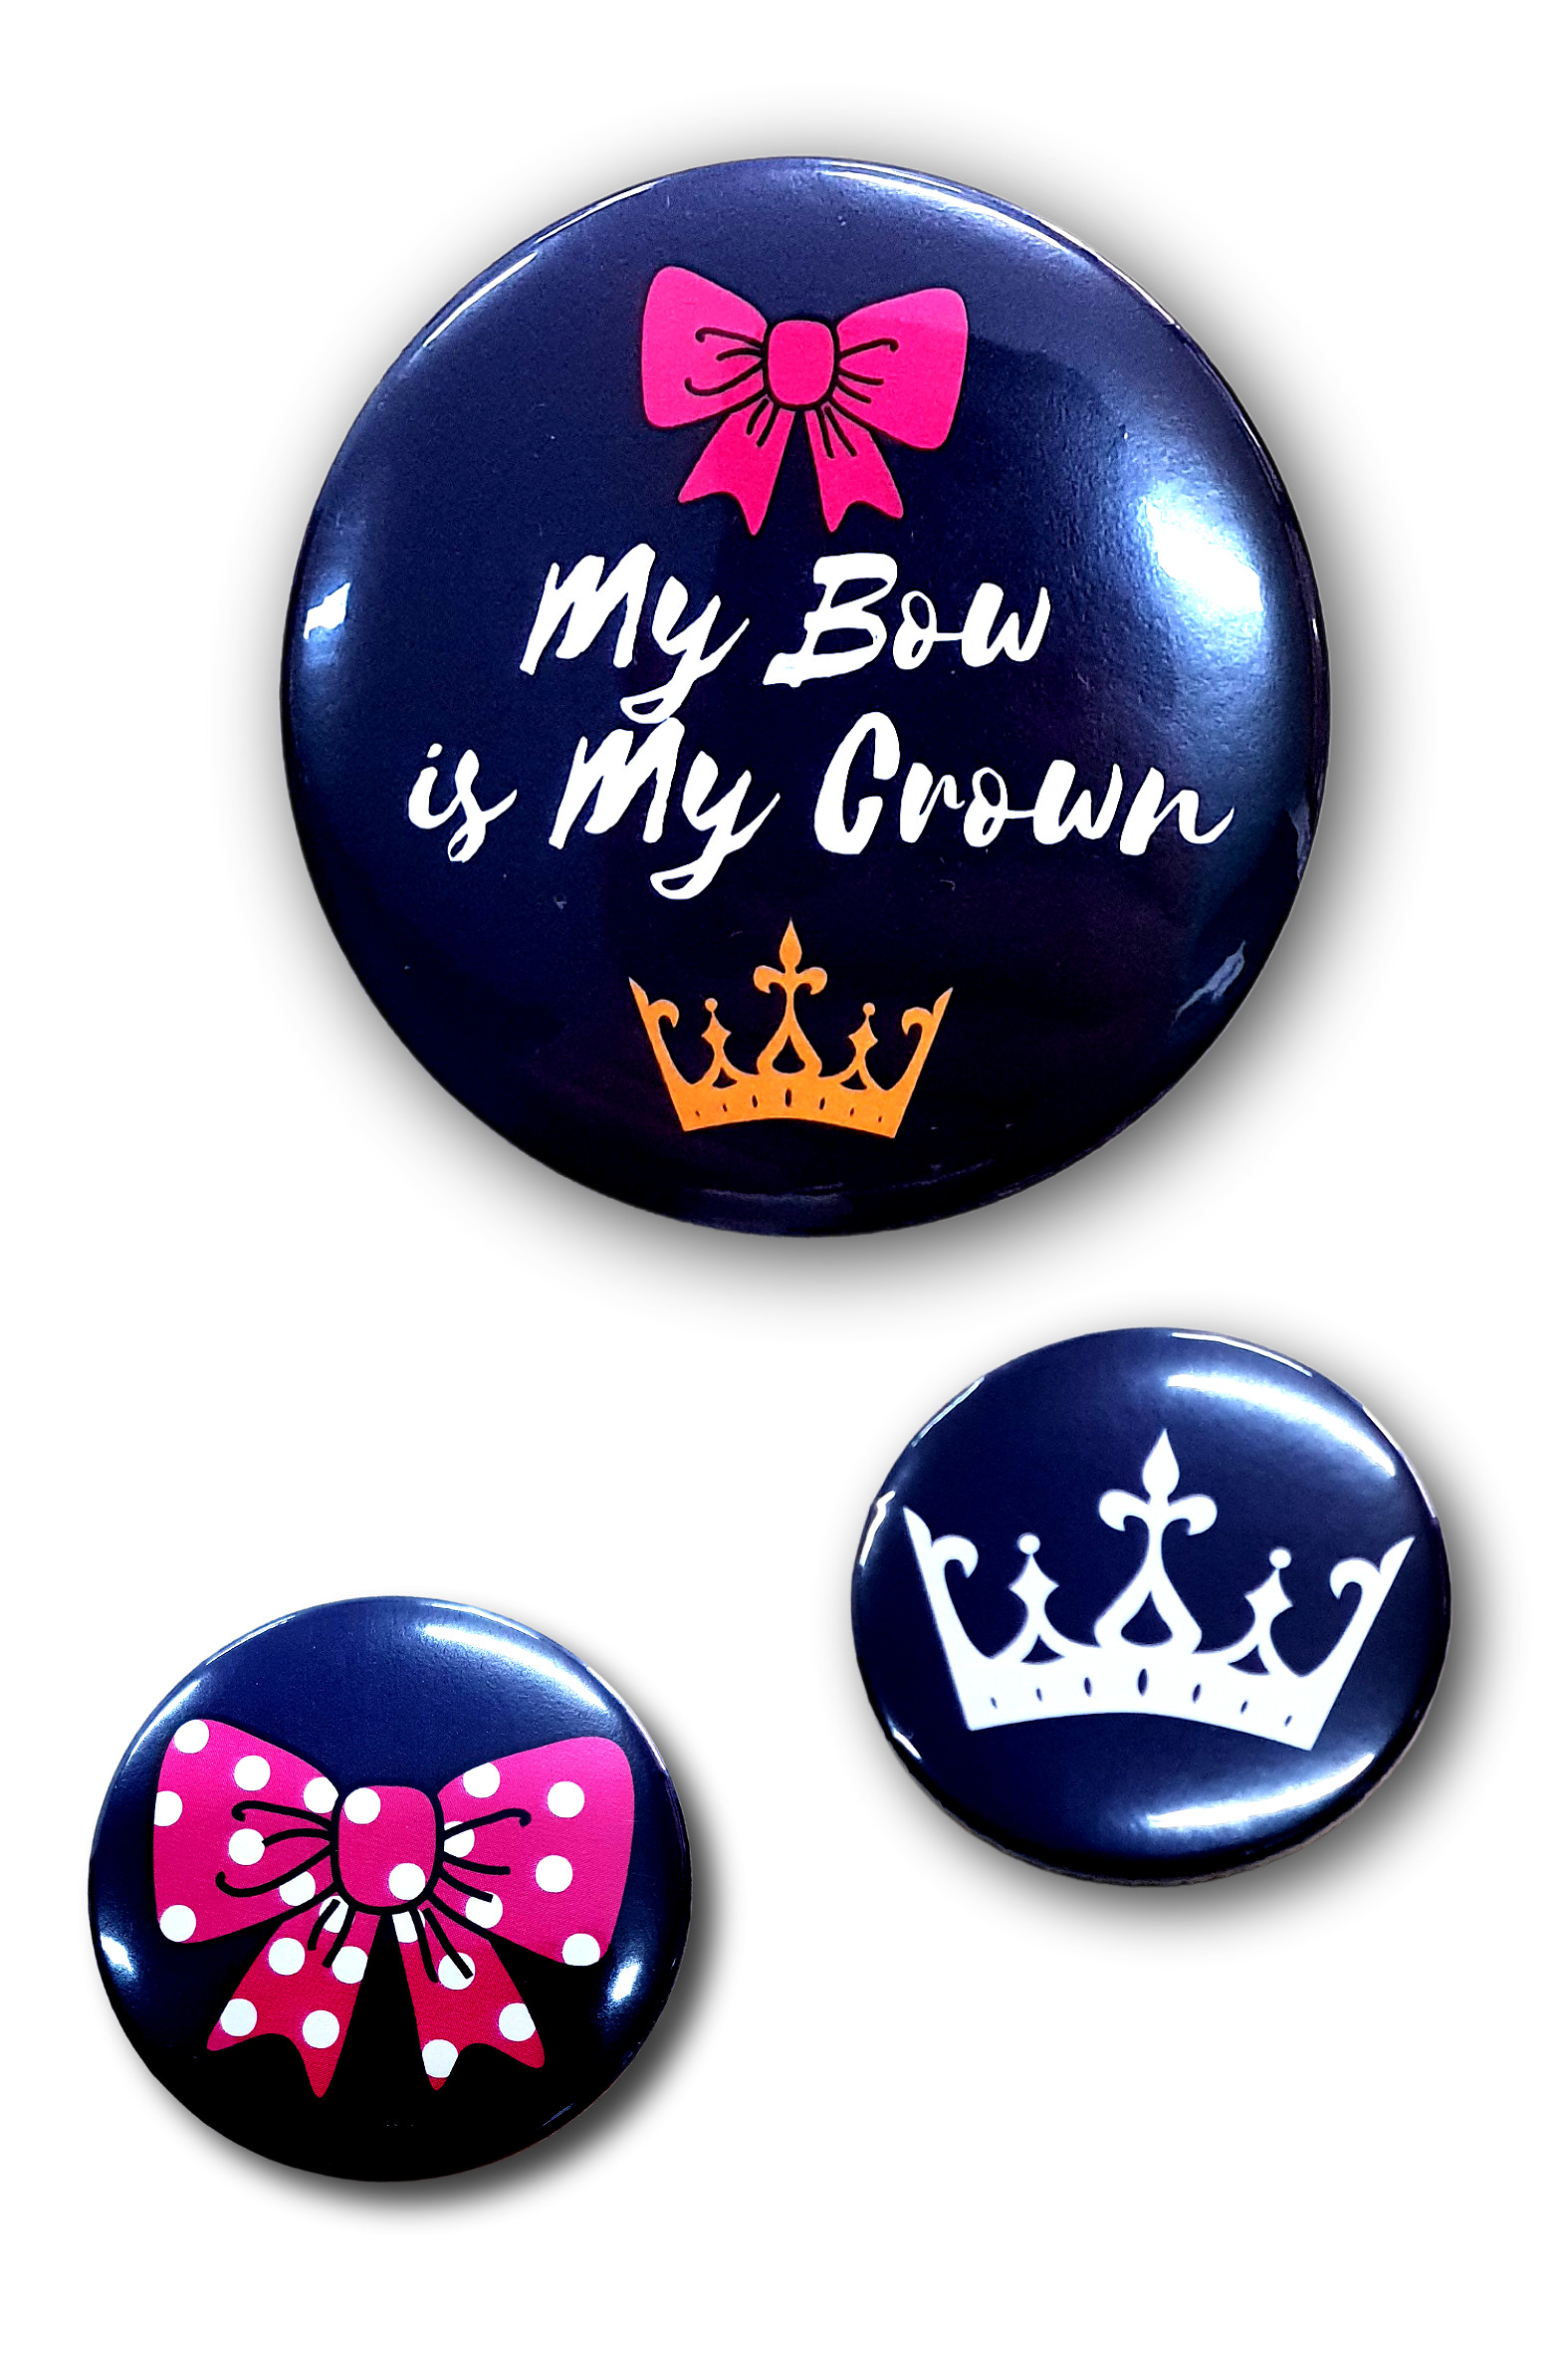 my bow is my crown przypinki dla cheerleaders buttony dla cheerleaderki